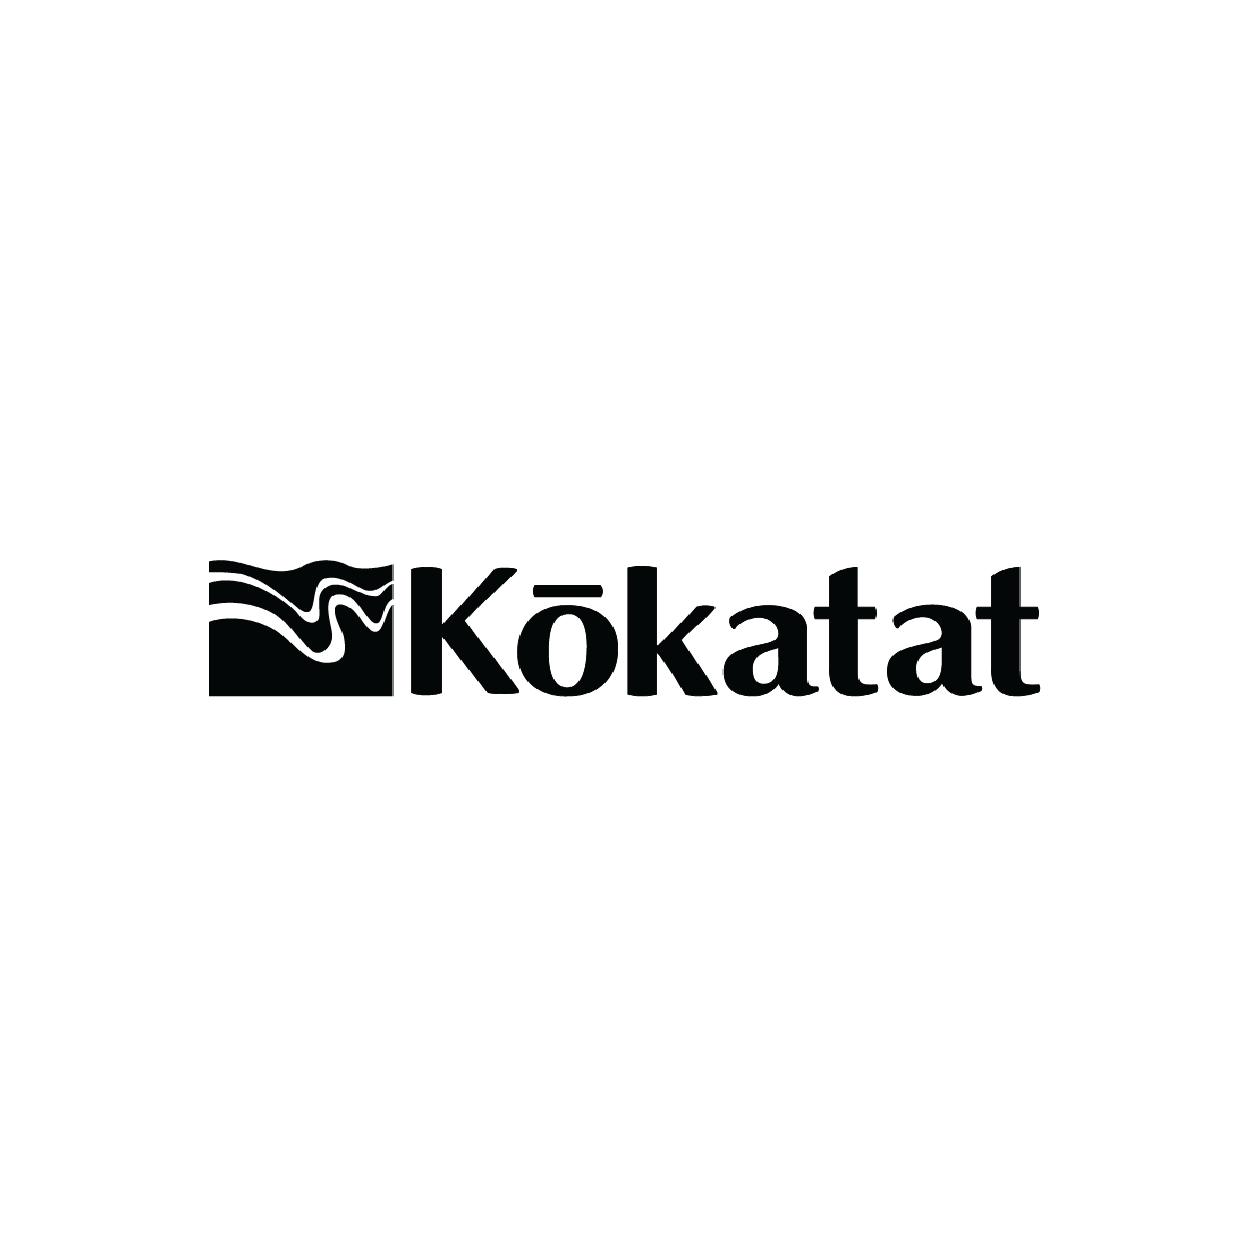 Sponsorpitch & Kōkatat